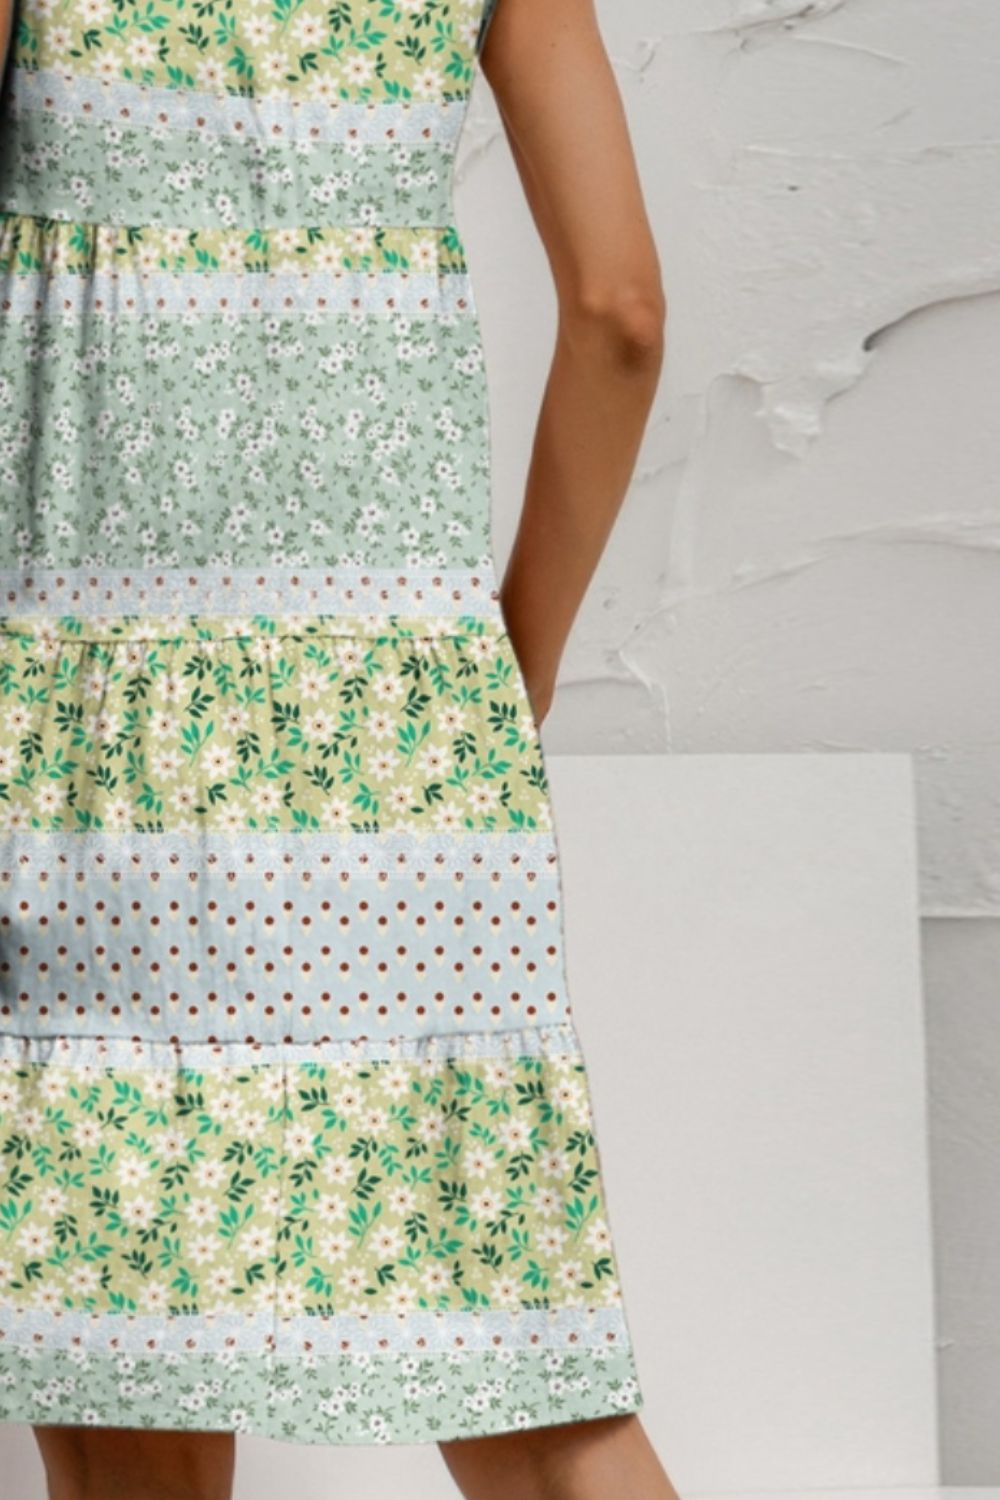 TEEK - Tiered Printed Round Neck Sleeveless Dress DRESS TEEK Trend   